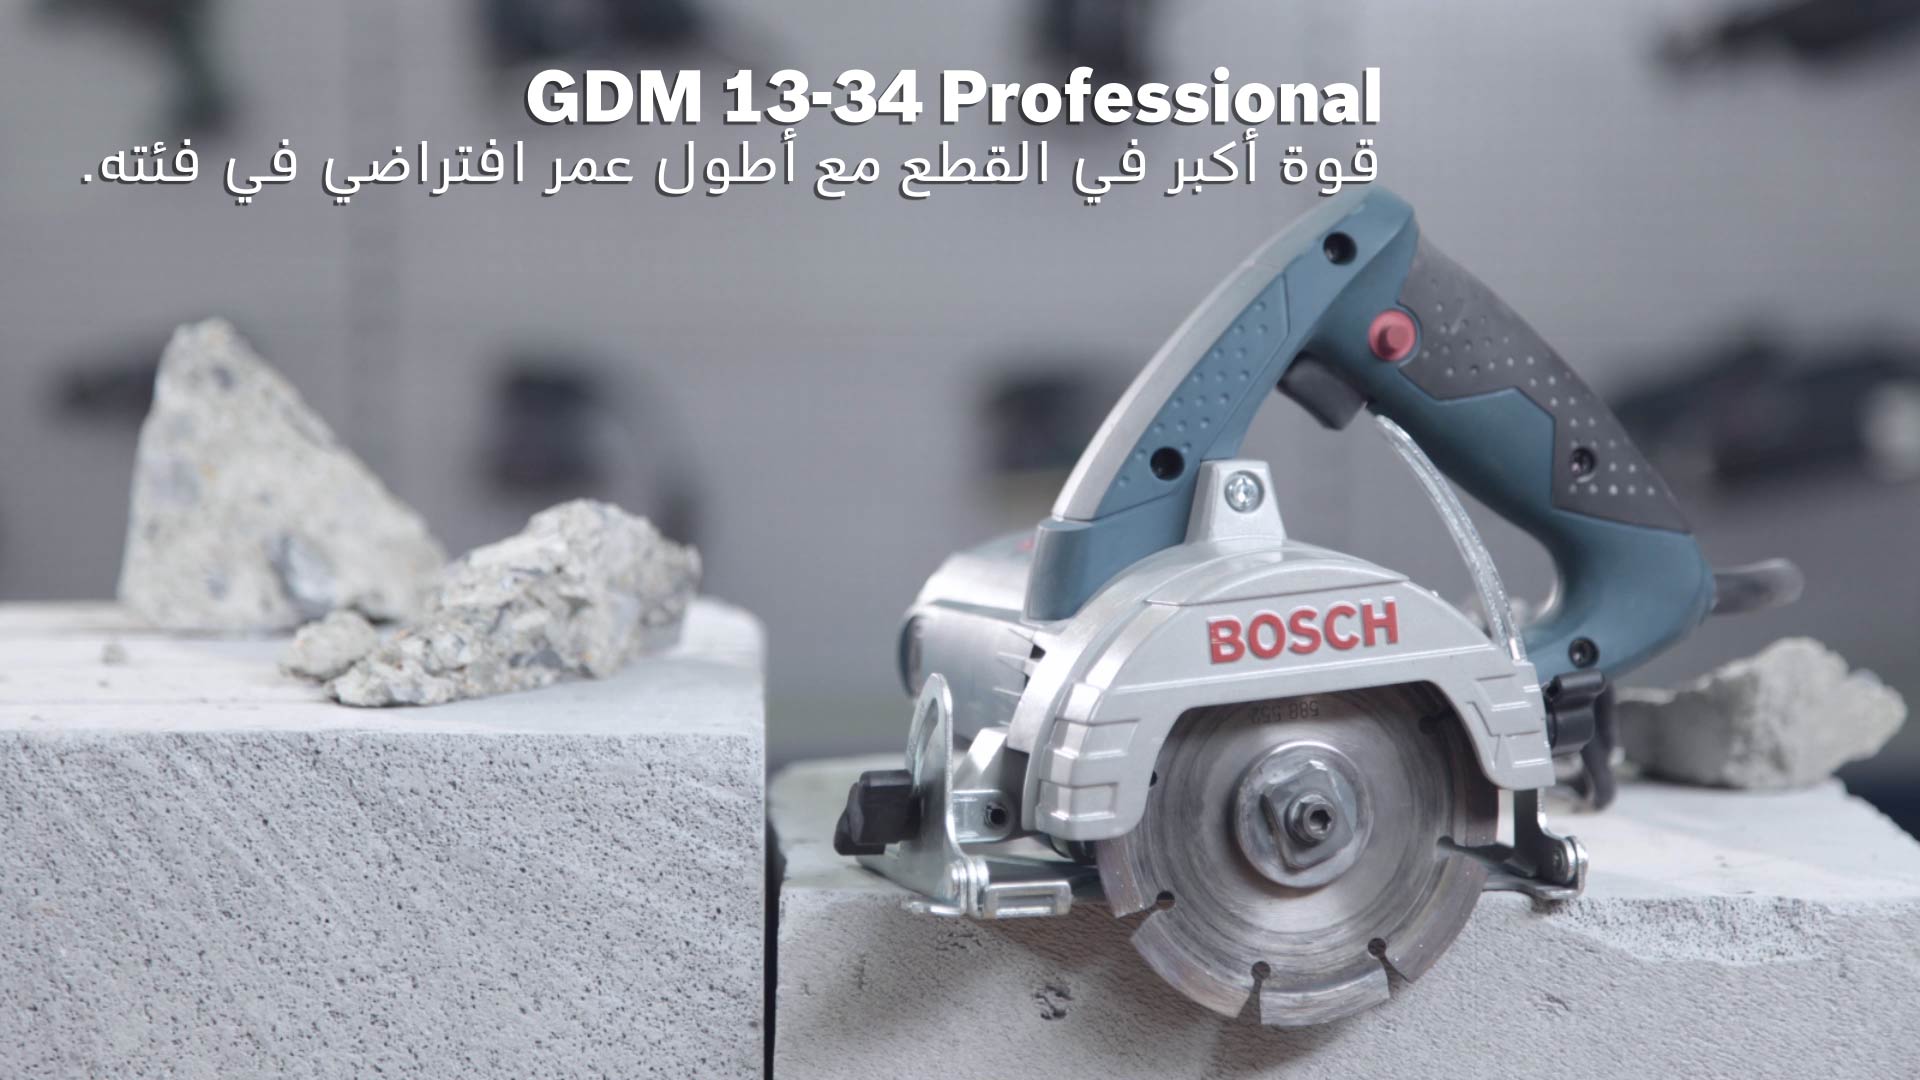 GDM 13-34